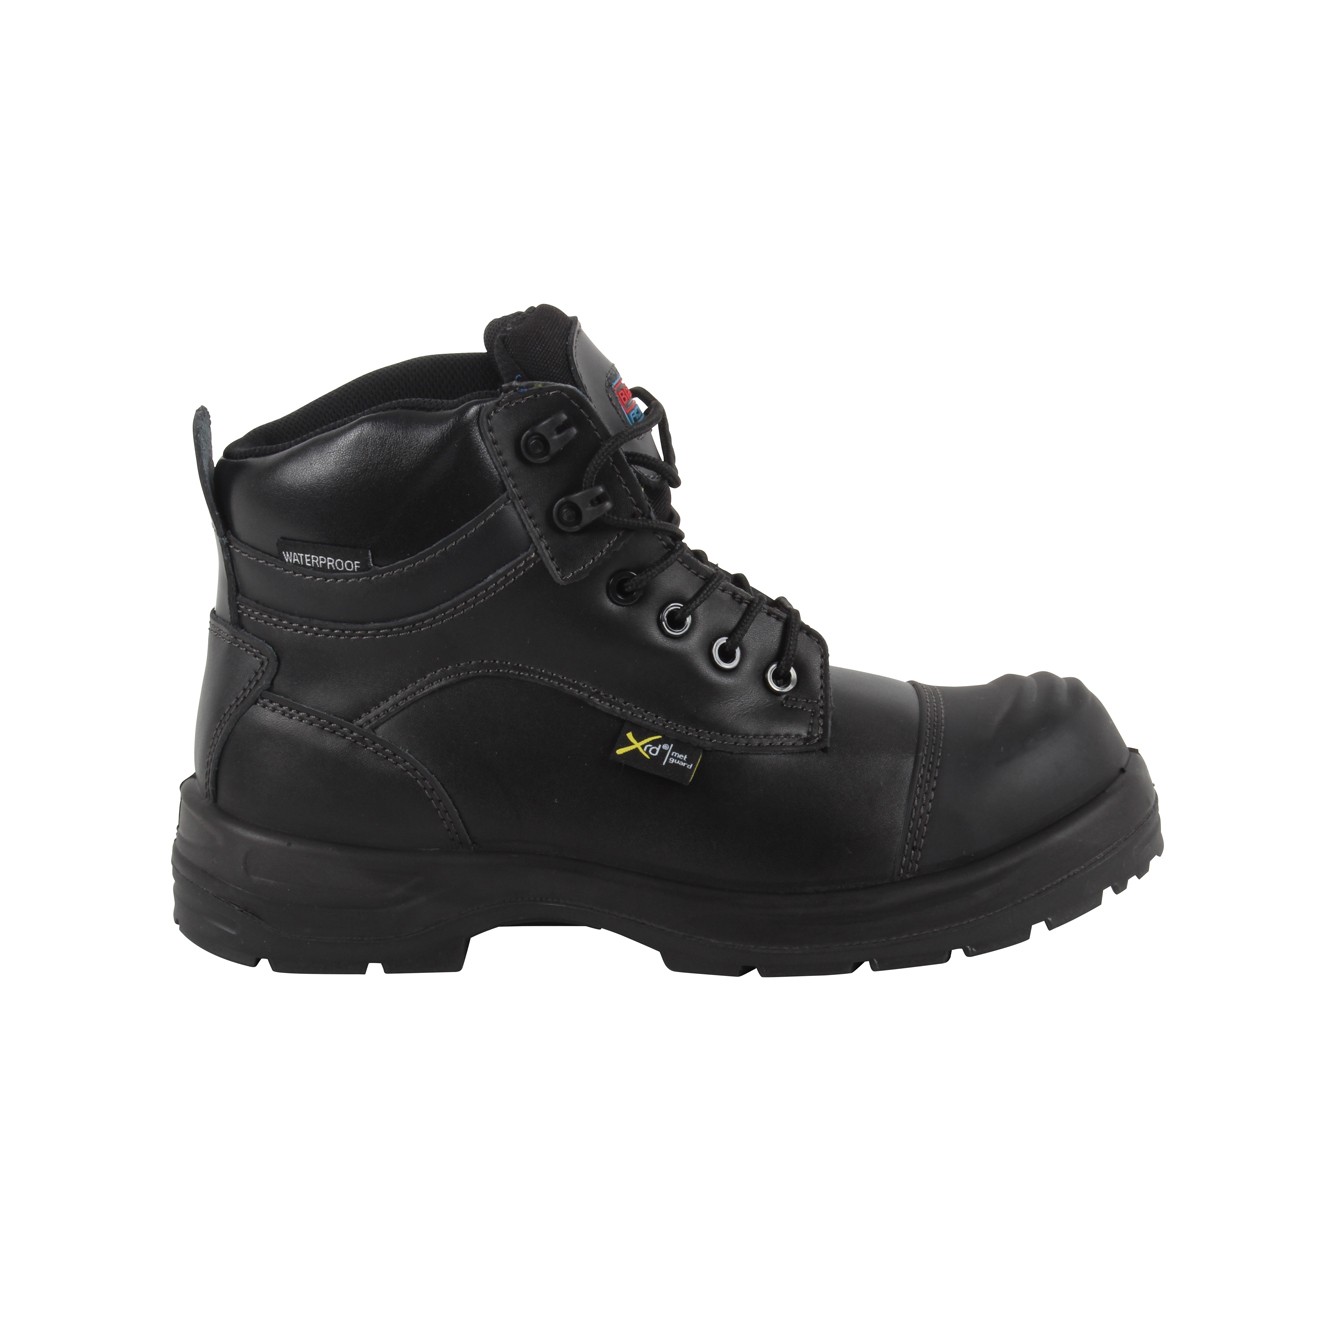 BLACKROCK Hiker Steel Toe Cap Midsole Water Resistant Leather Safety Shoes Size